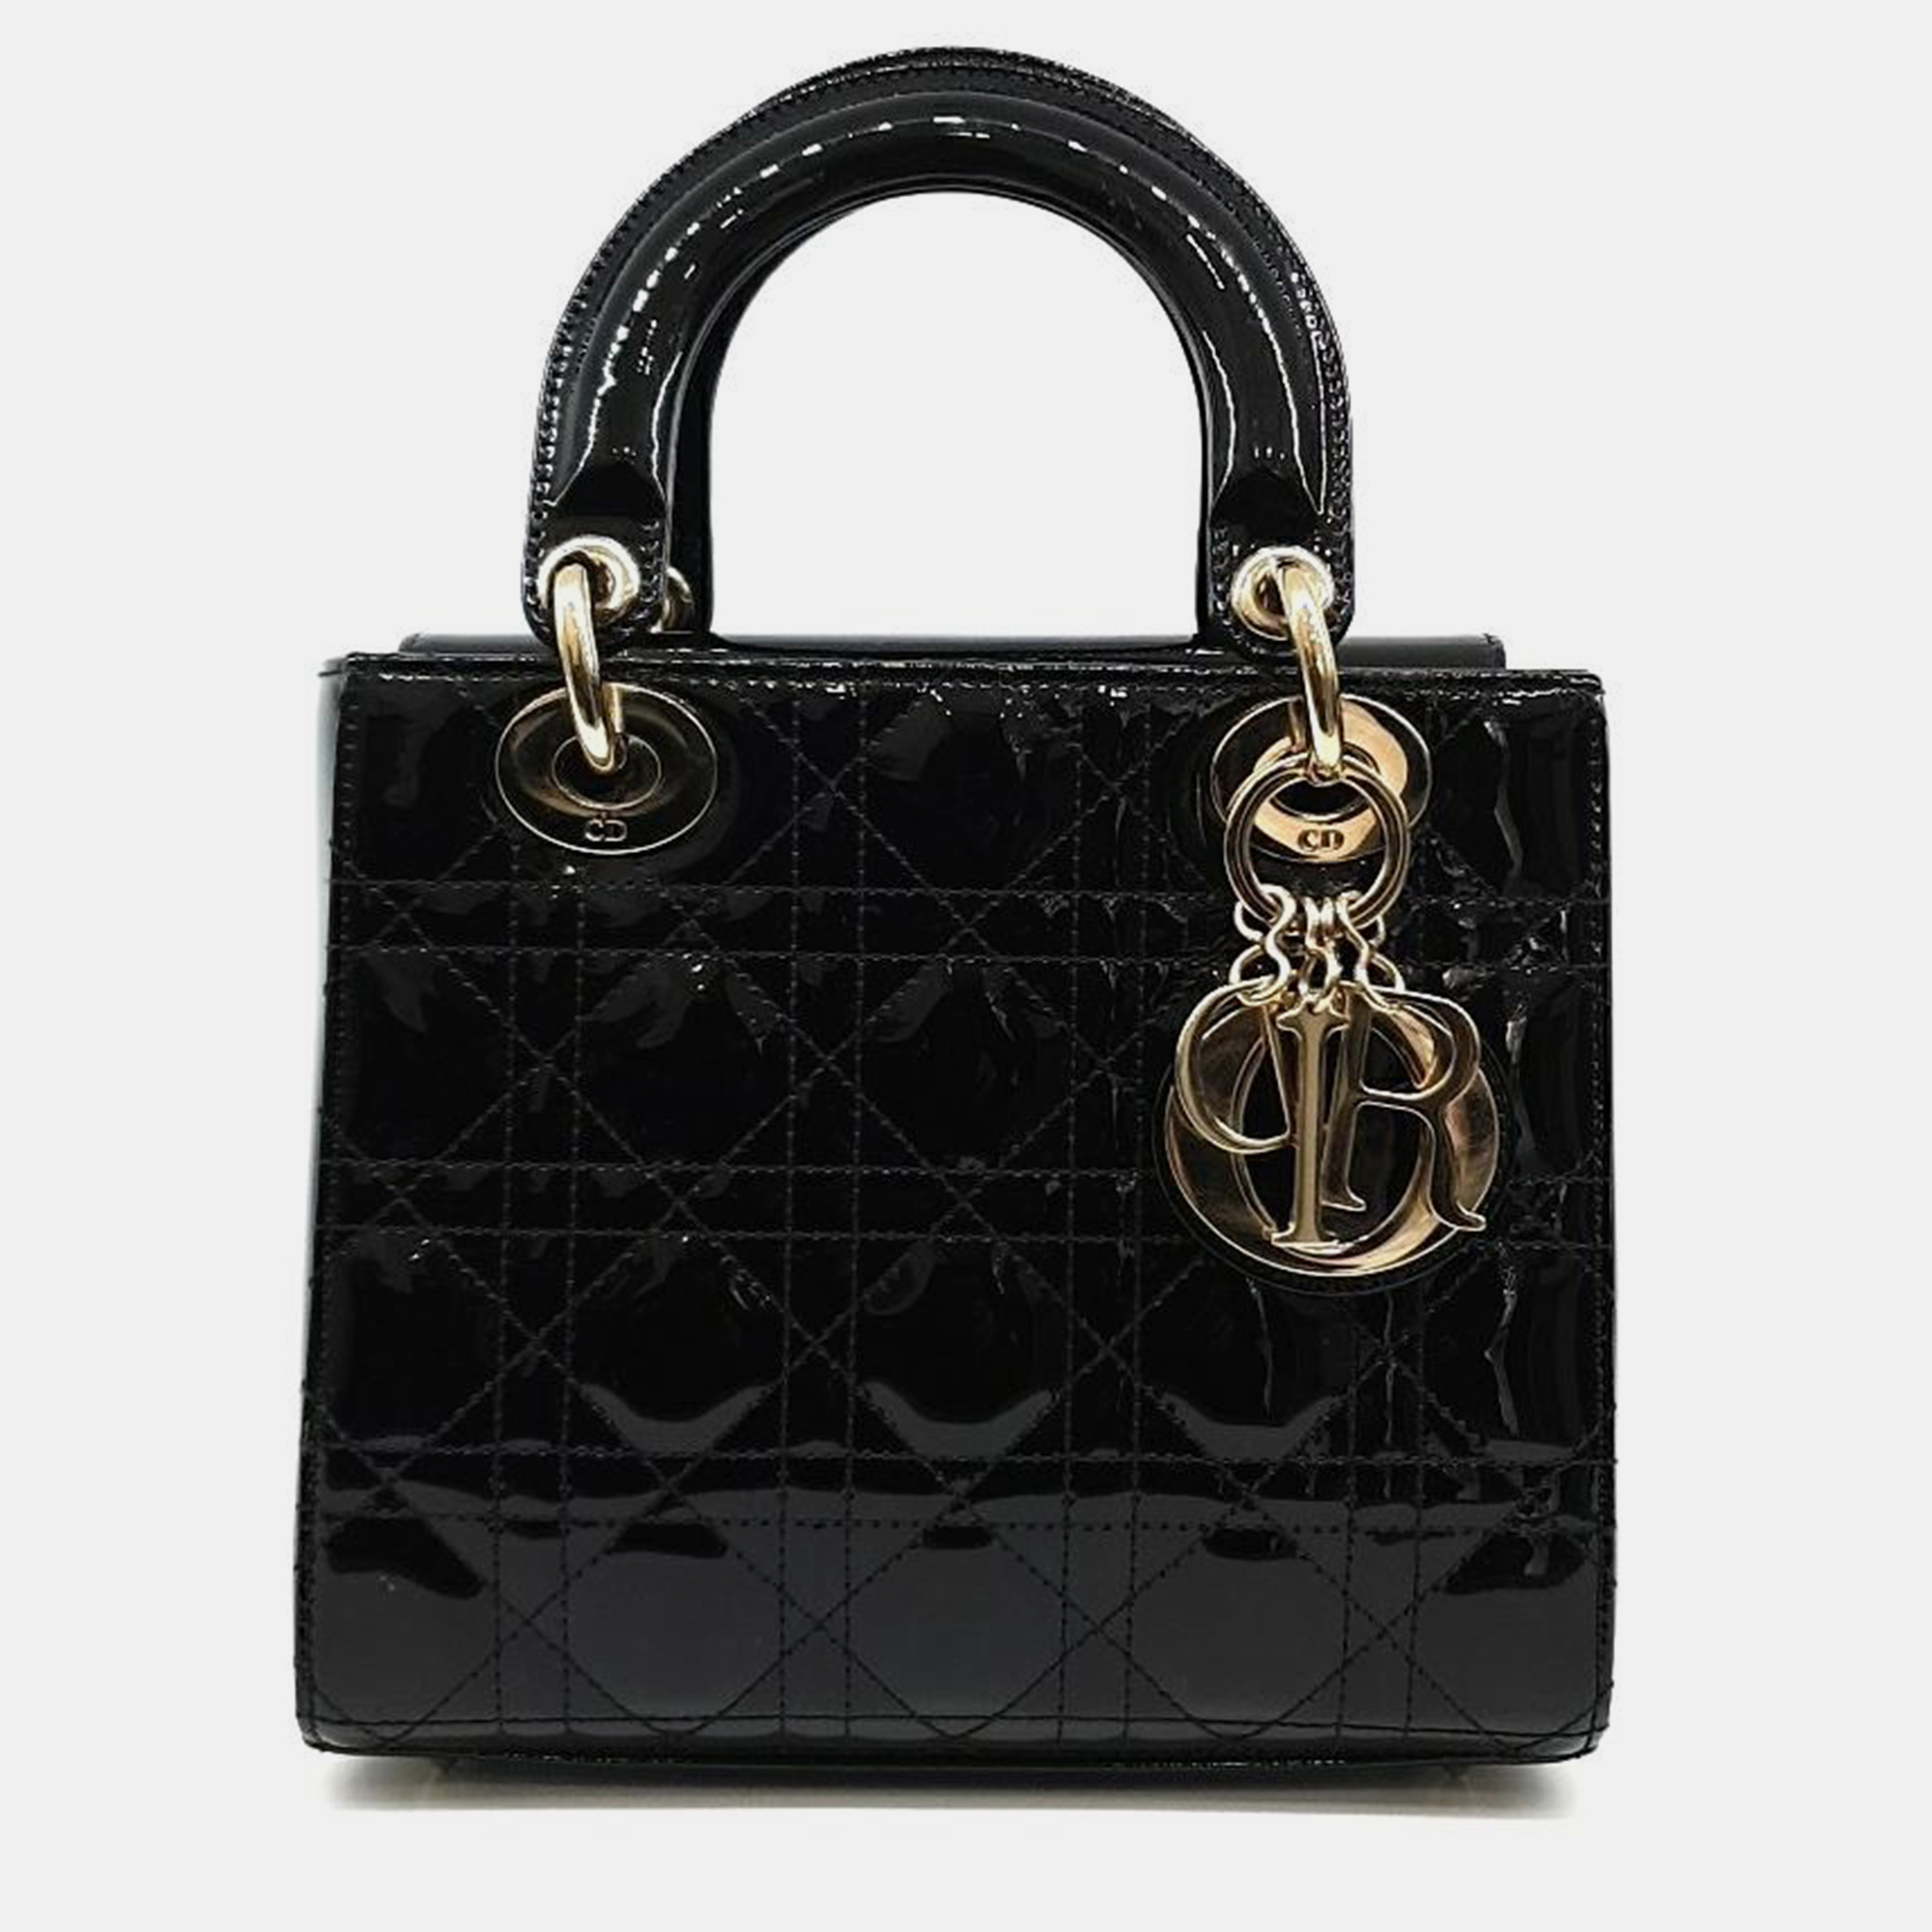 Dior black patent leather small lady dior tote bag